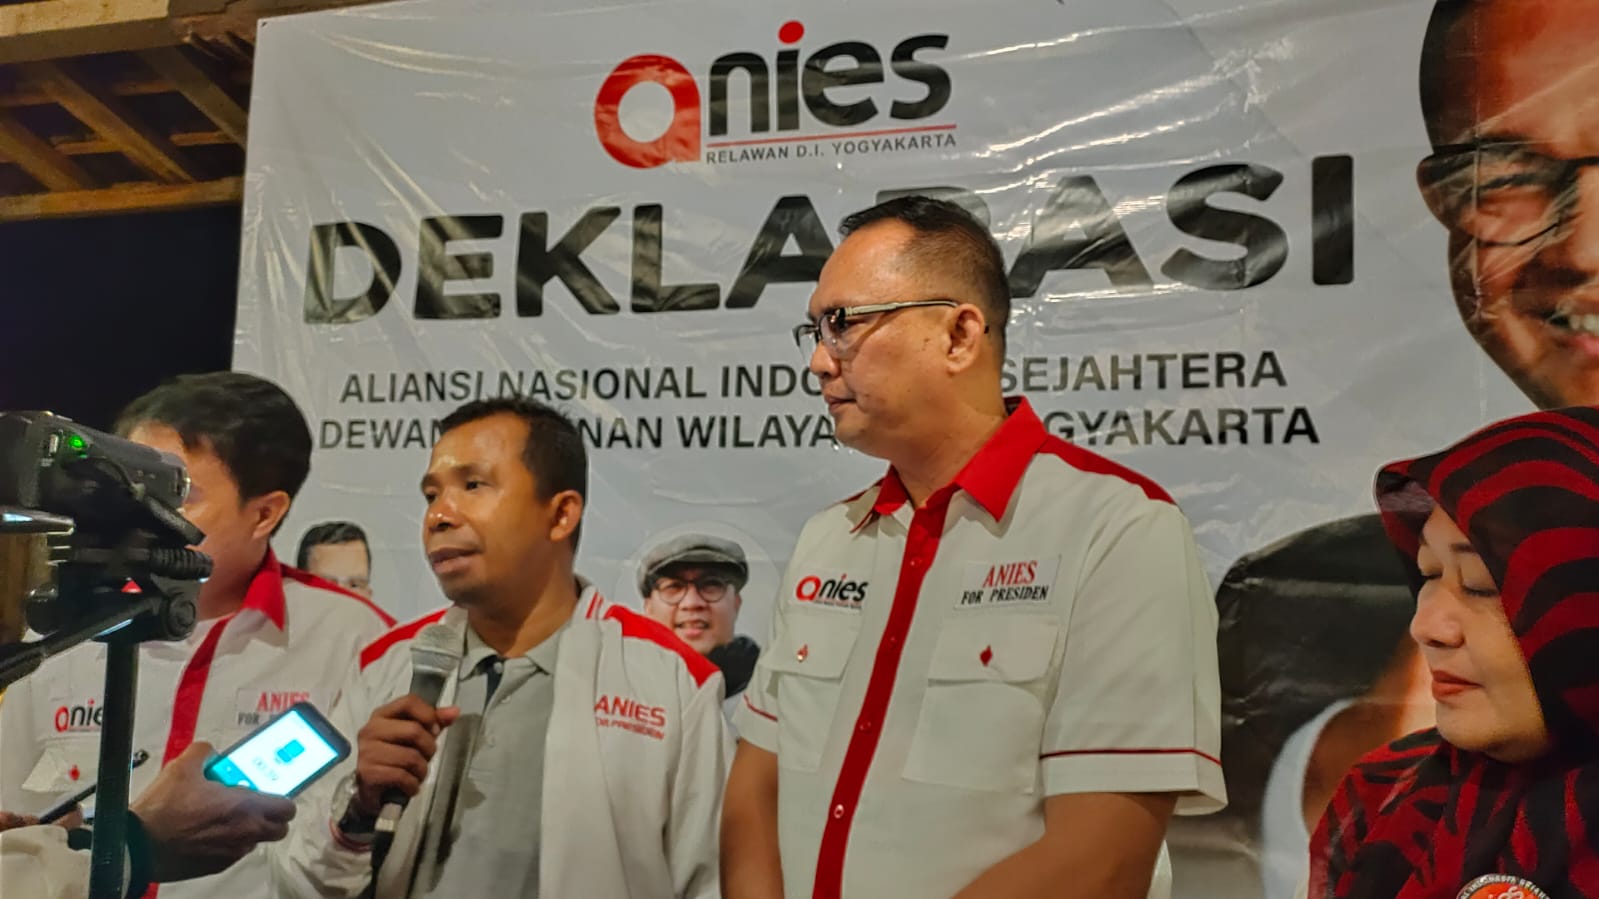 Eks Wakil Ketua Timses Jokowi Pimpin DPW Anies DIY